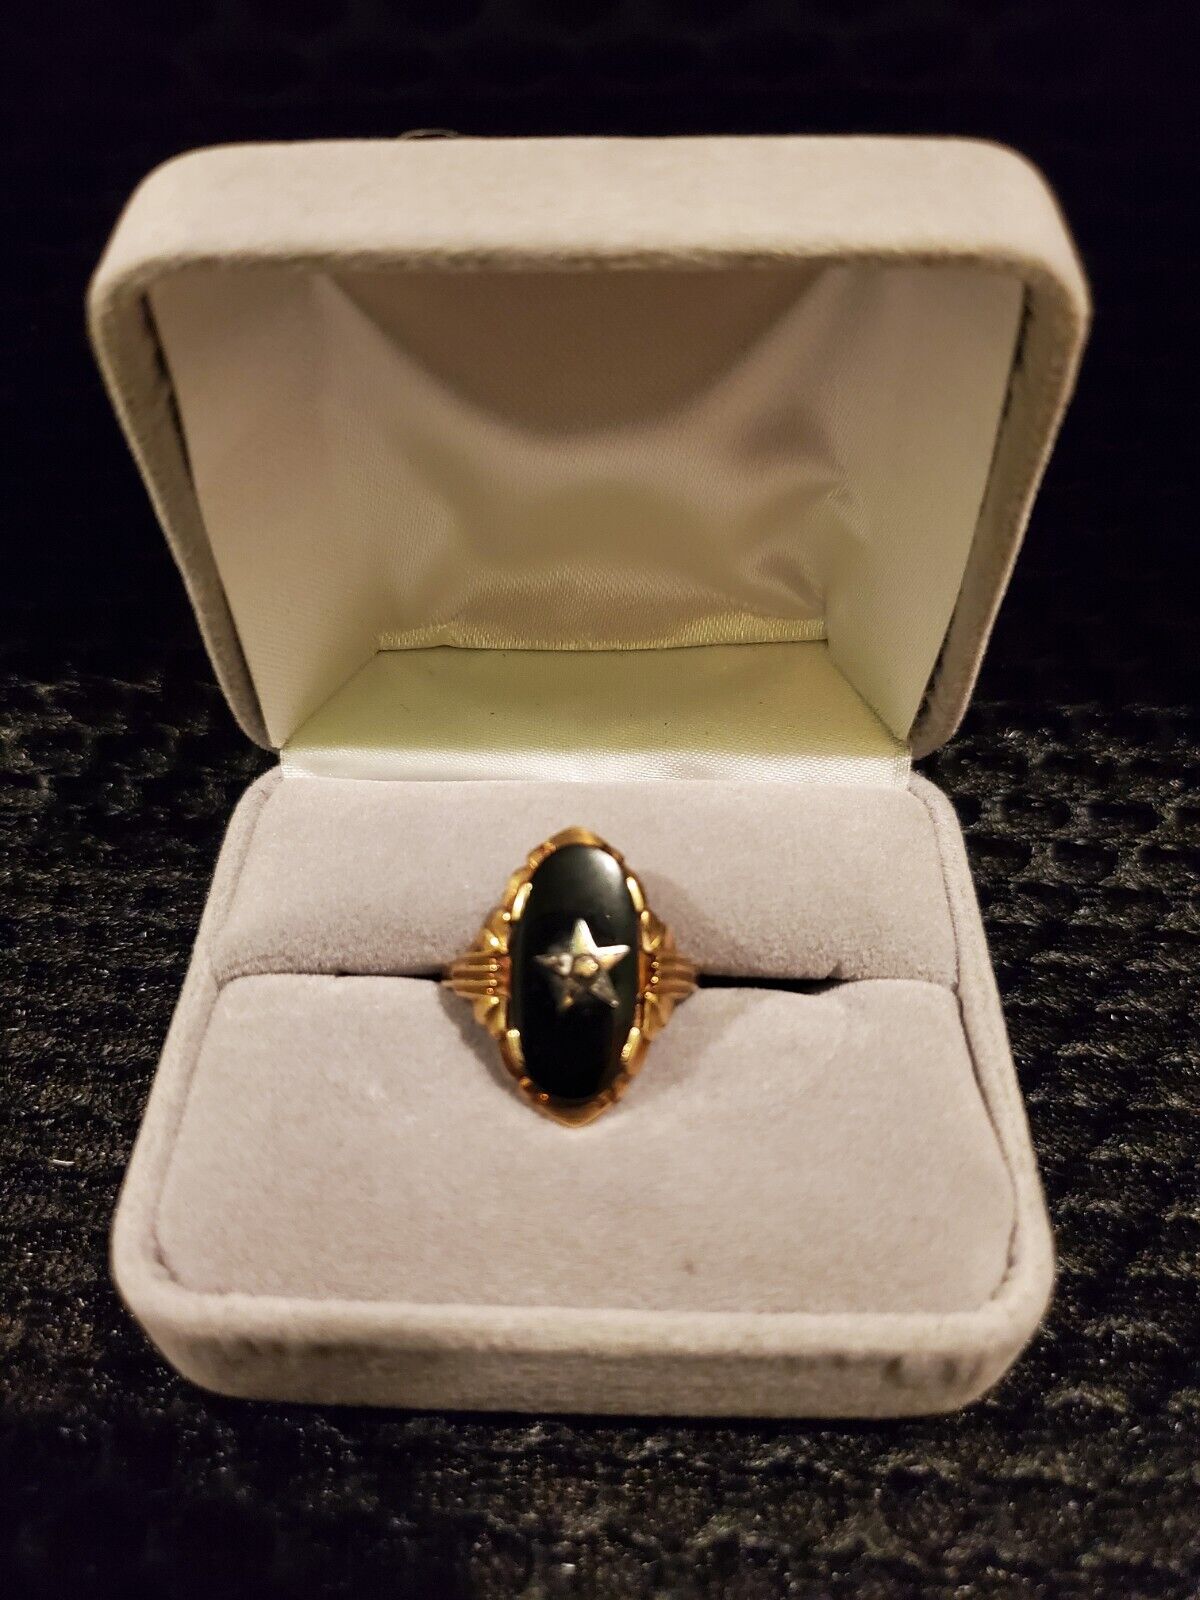 Vintage 10k Gold Masonic Ring, Order of the Eastern Star, size 7.5 Black Onyx